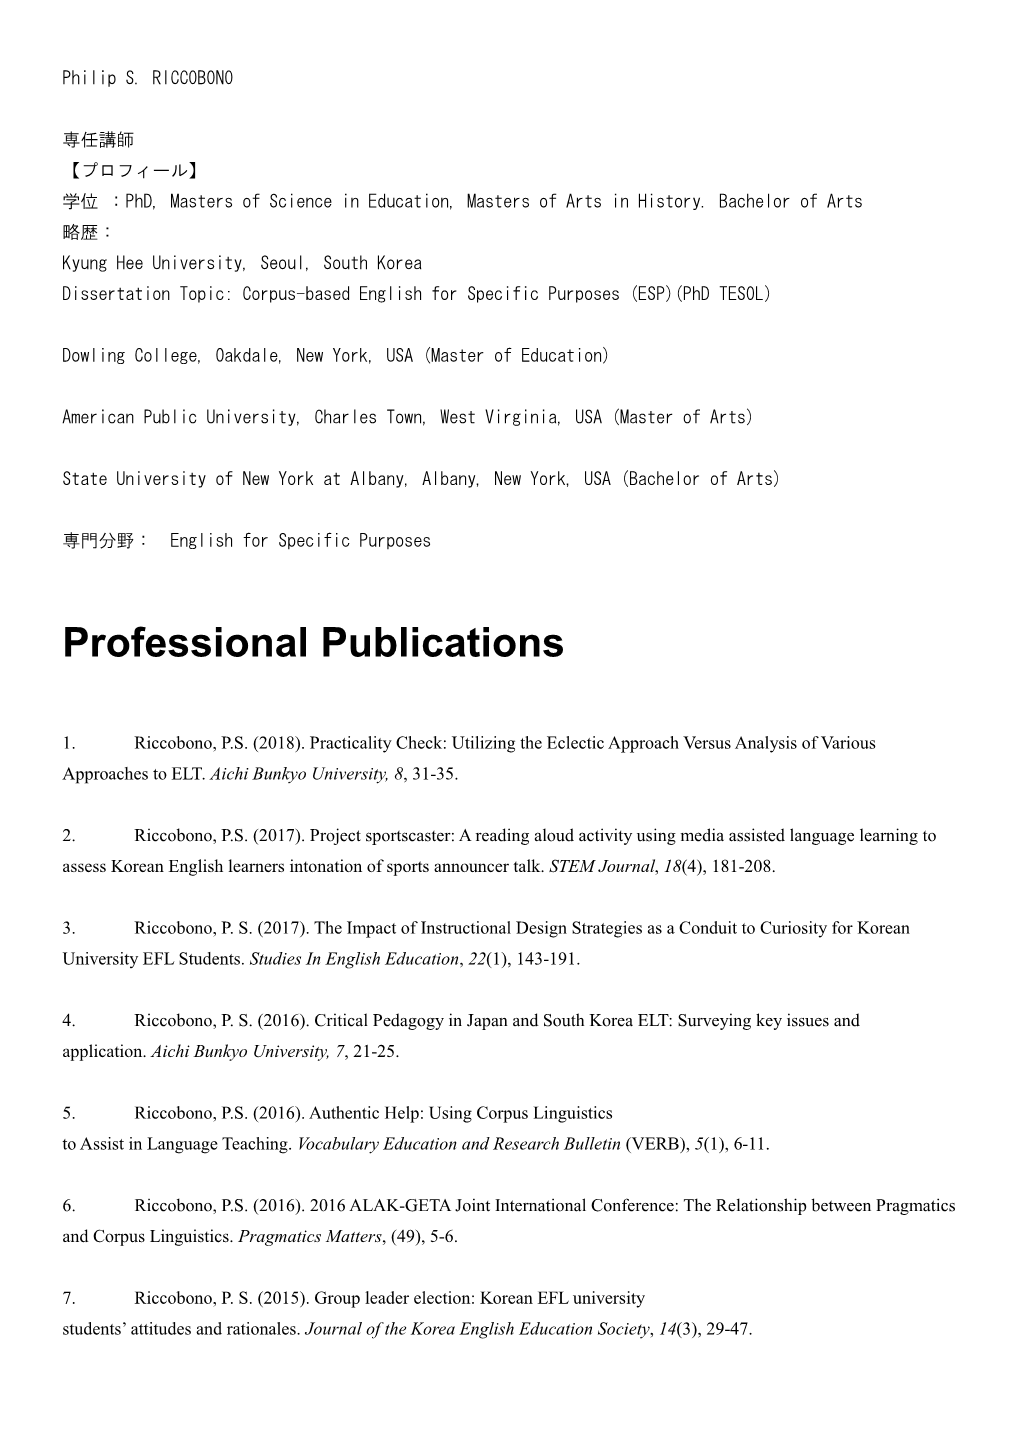 Professional Publications